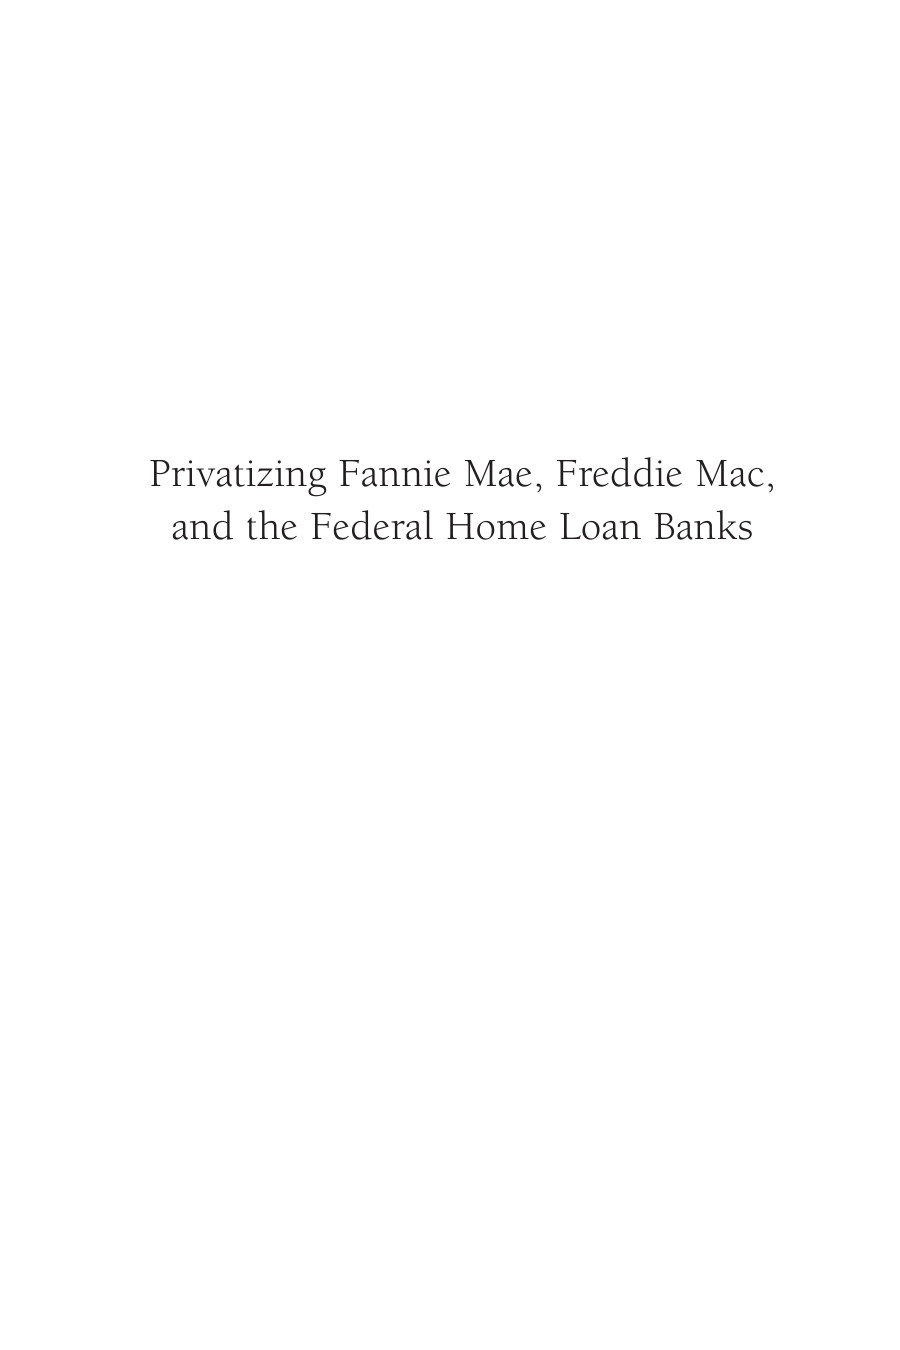 Privatizing Fannie Mae, Freddie Mac and the Federal Home Loan Banks